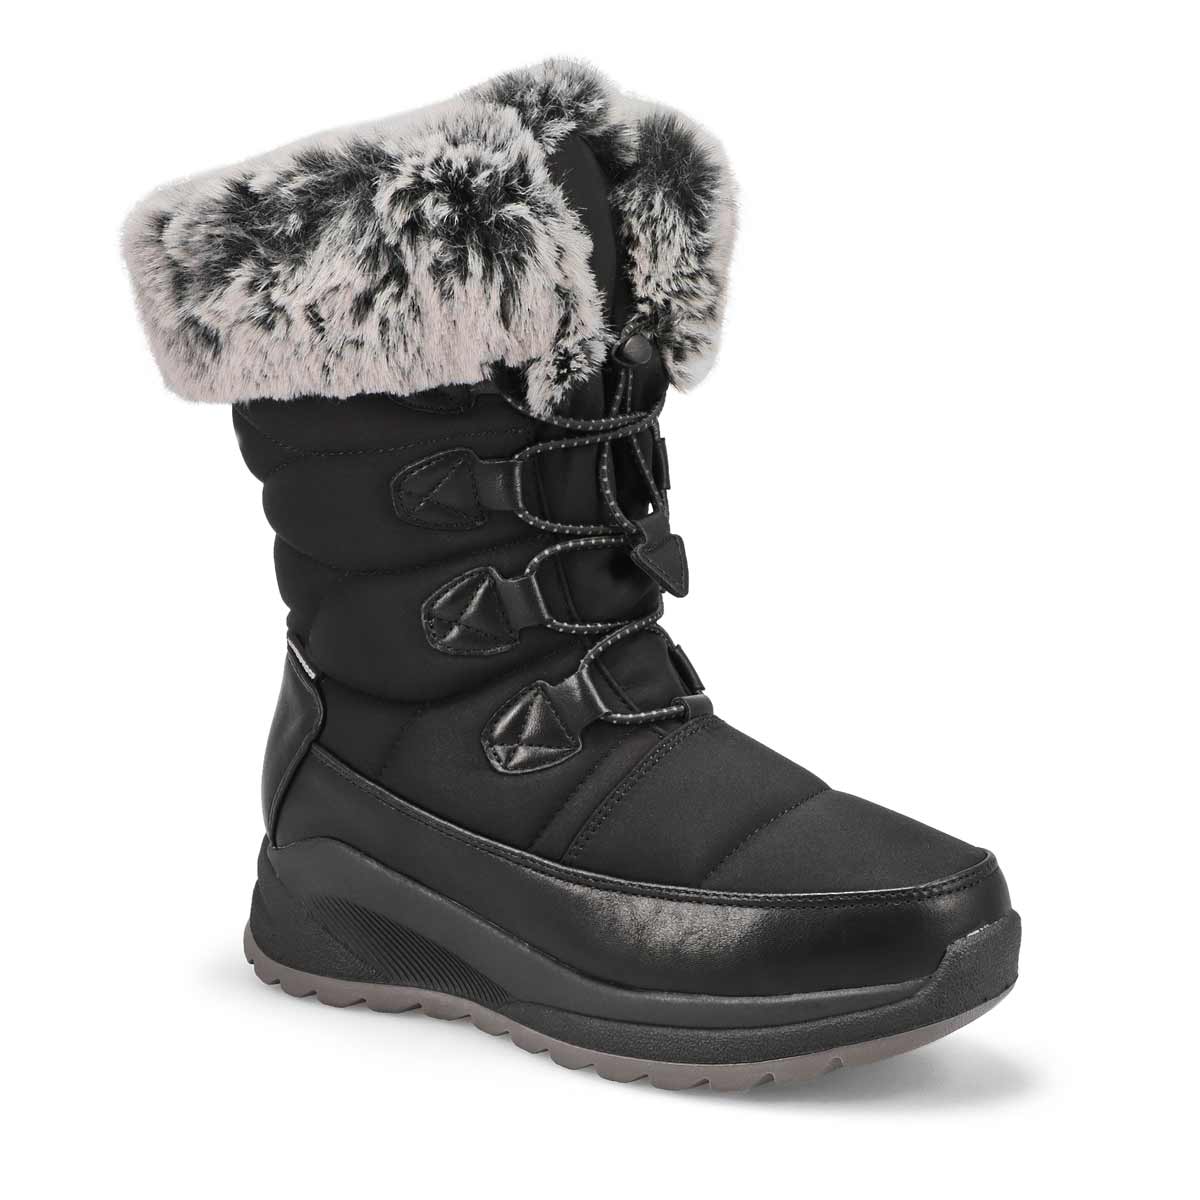 Women's Niobe Waterproof Winter Boot - Black